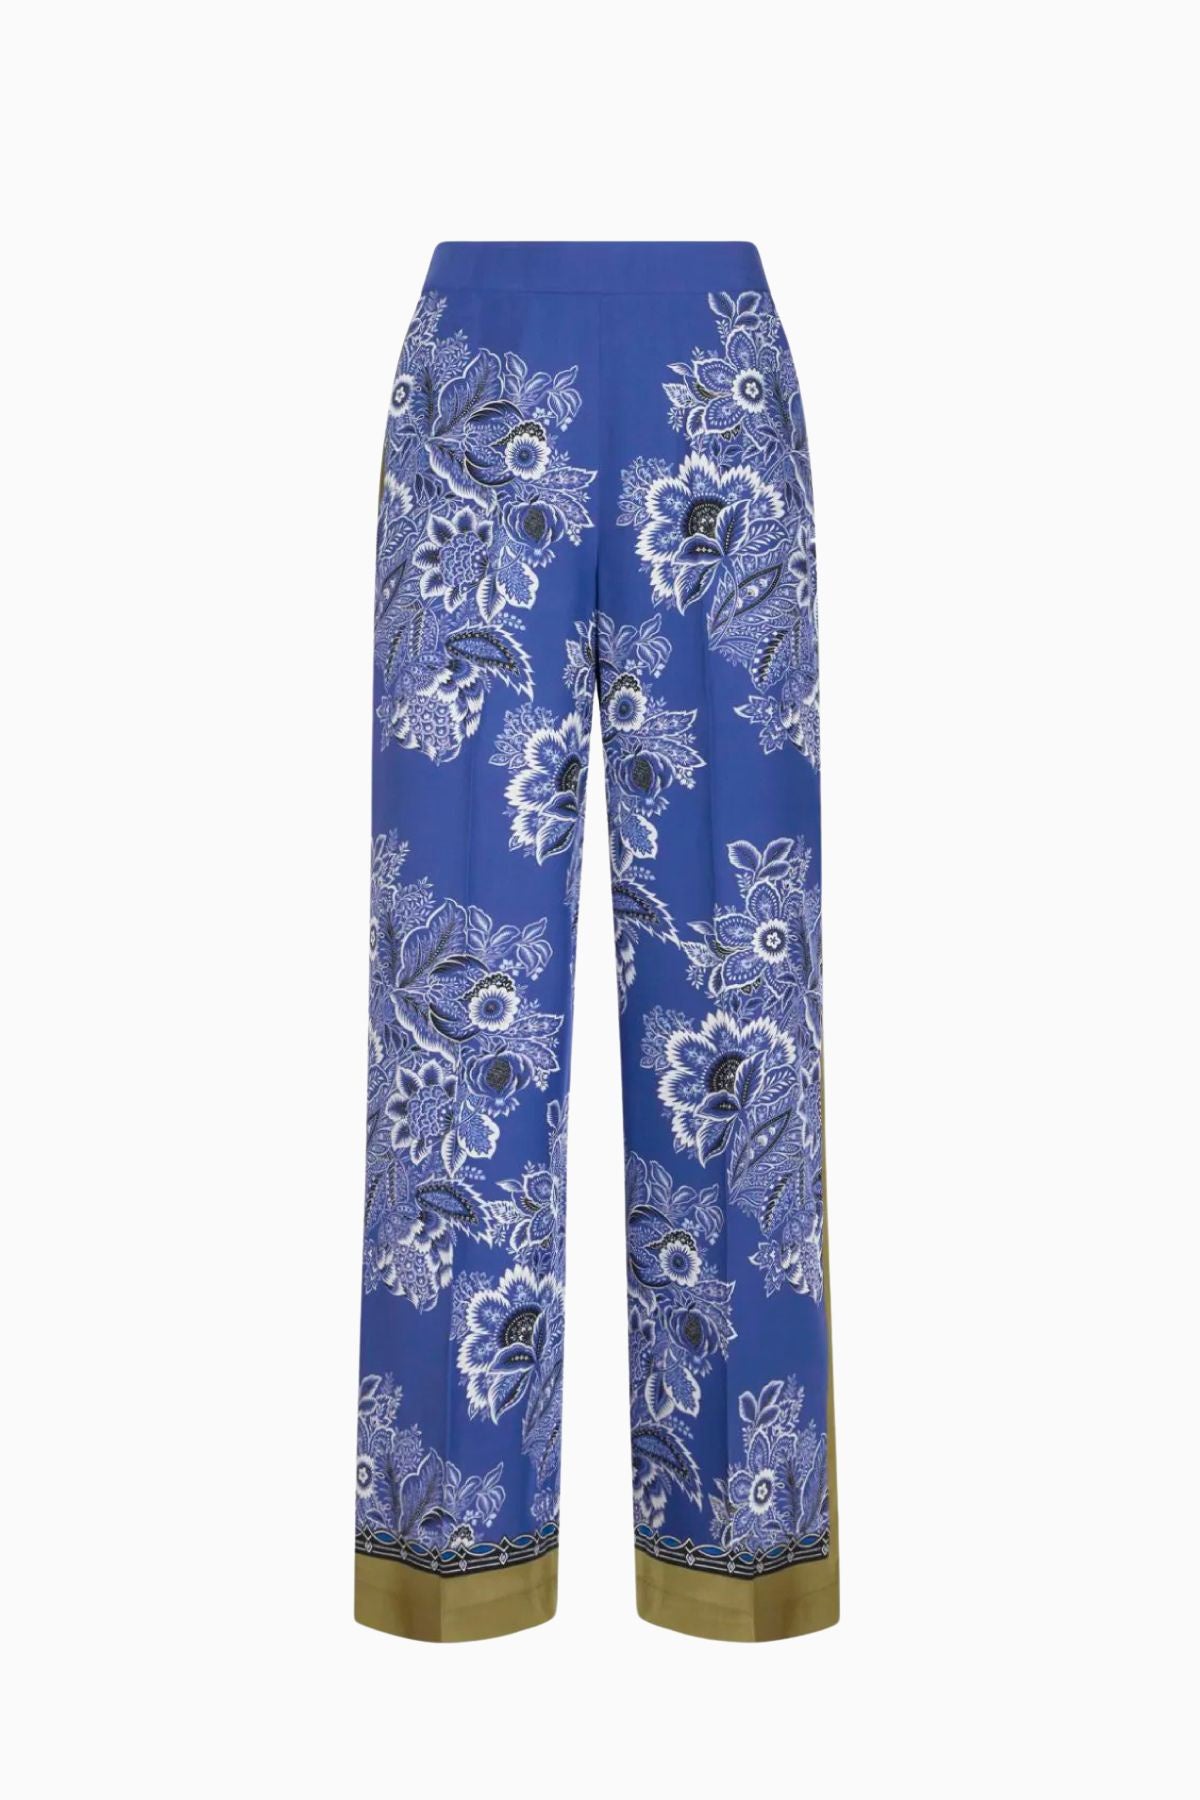 Etro Bandana Print Silk Pyjama Pant - Royal Blue